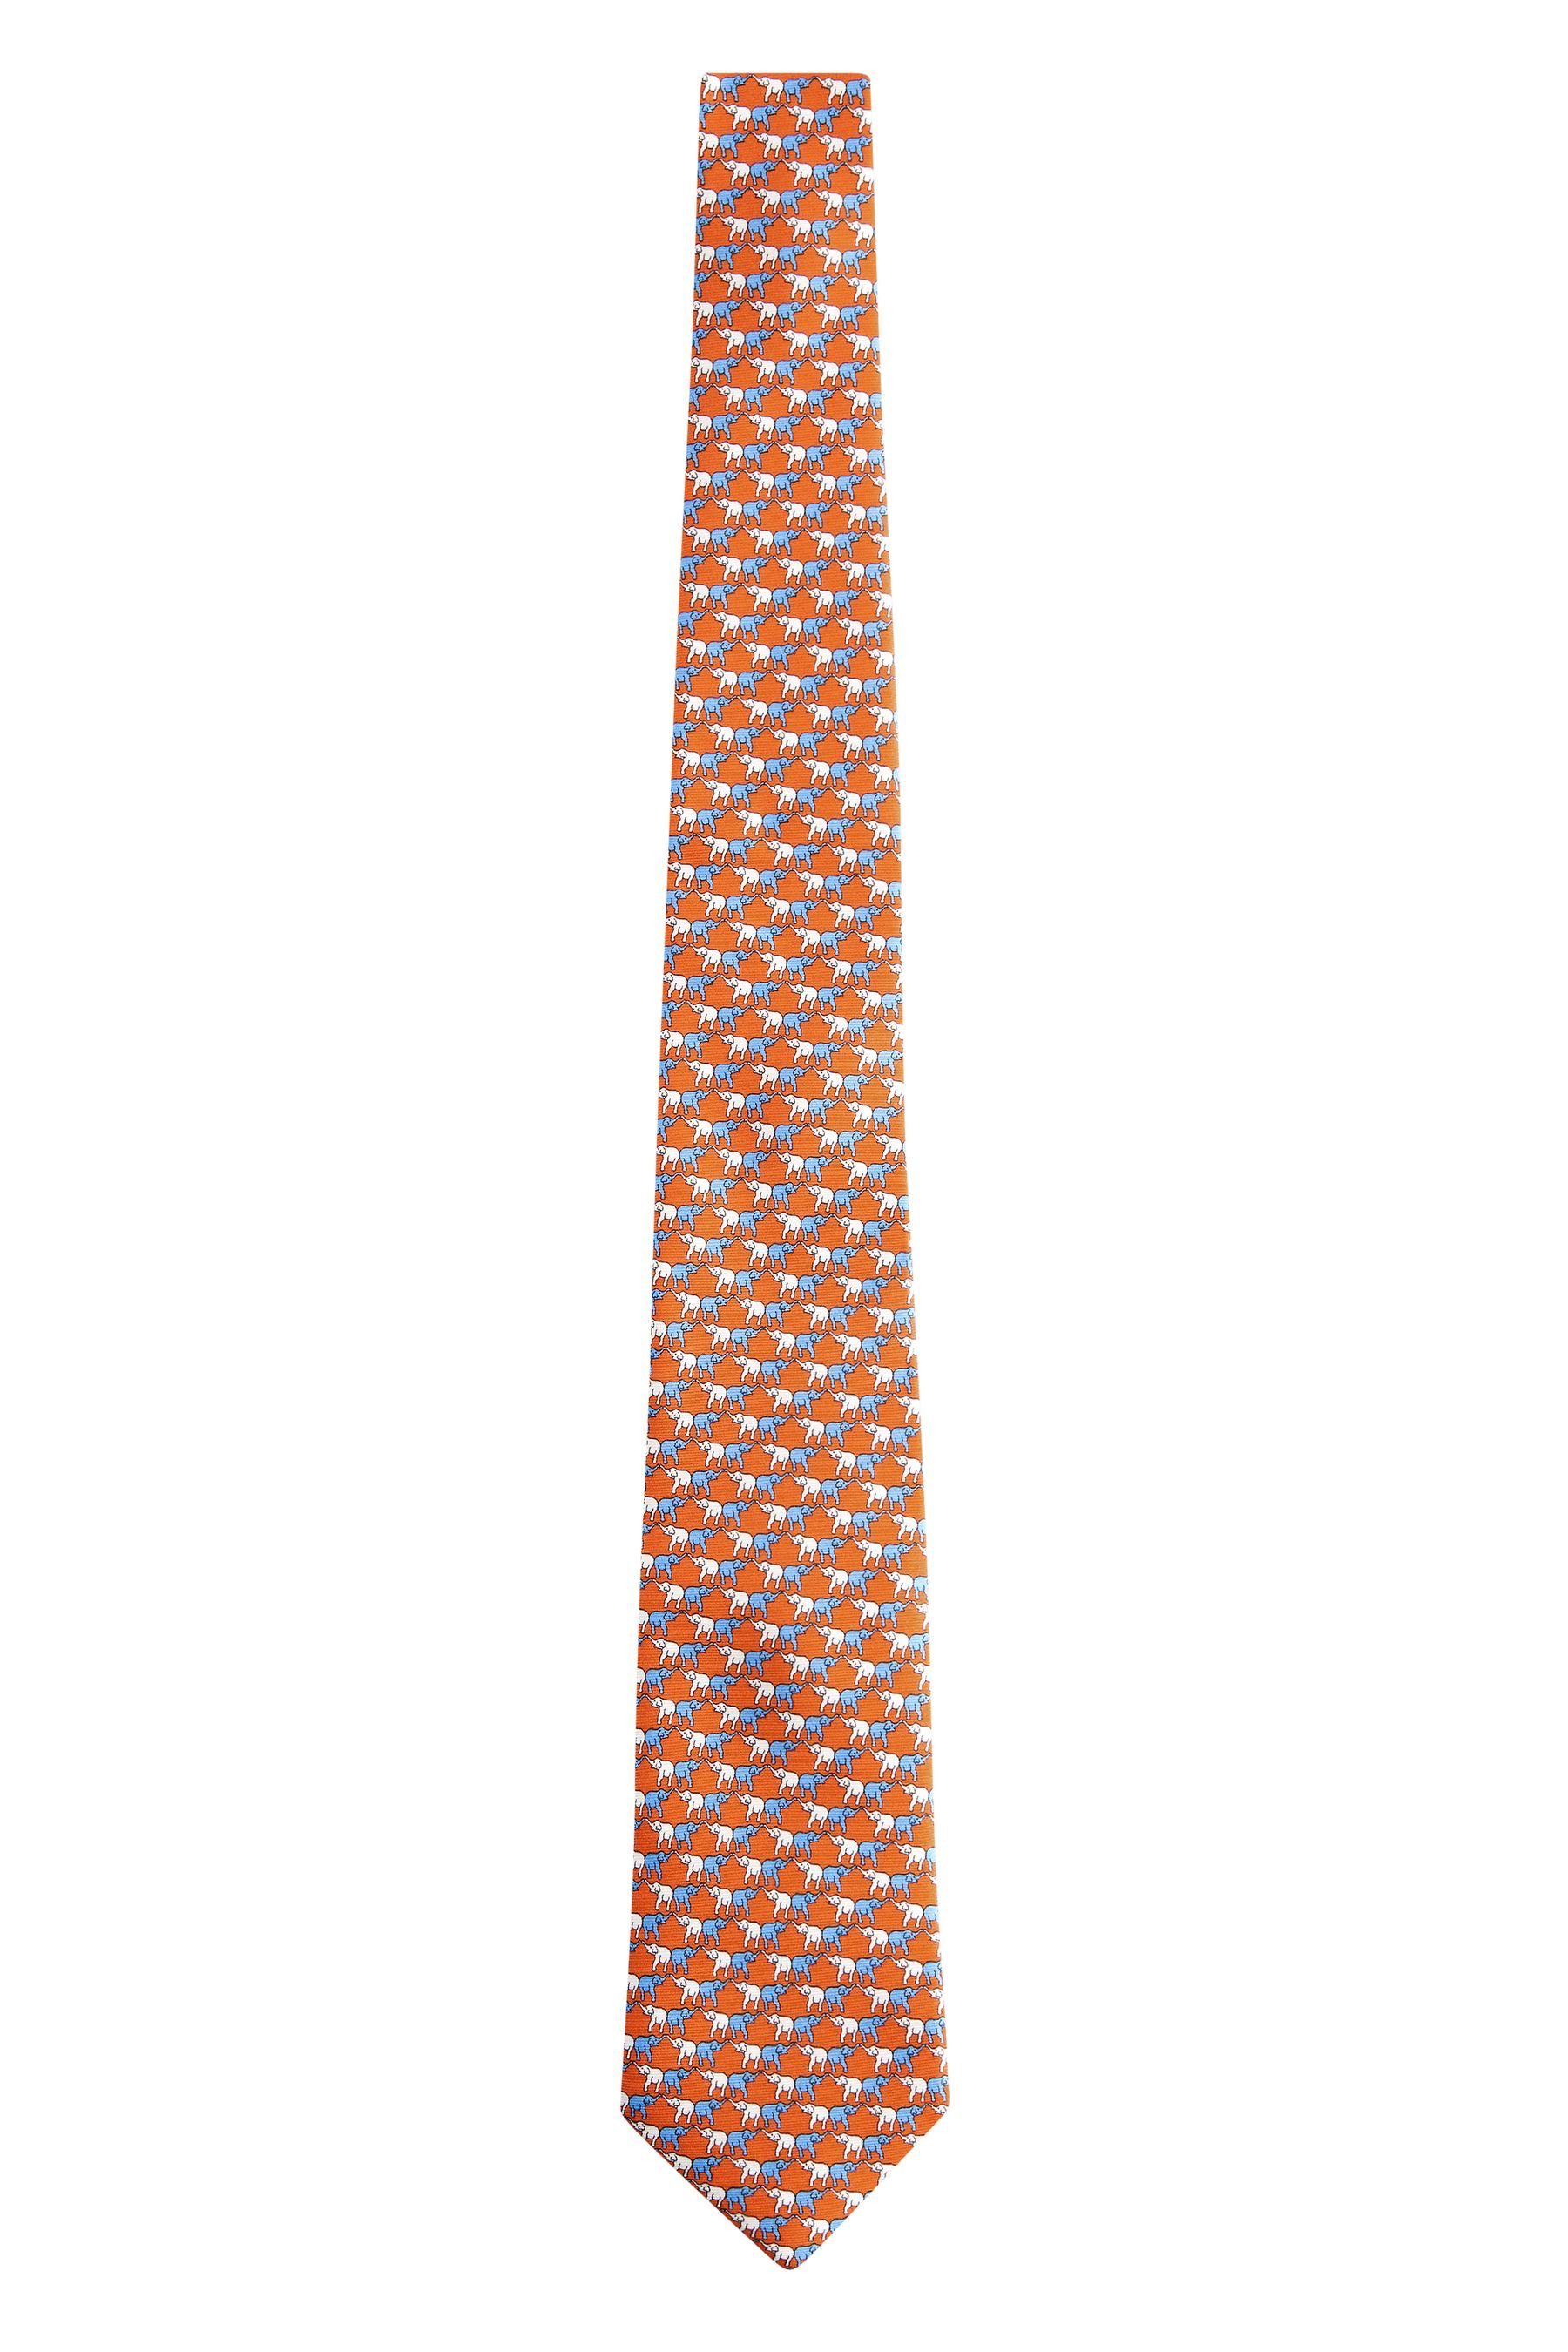 Signature Orange Made Krawatte in (1-St) Auffällige Krawatte Italy Elephant Next